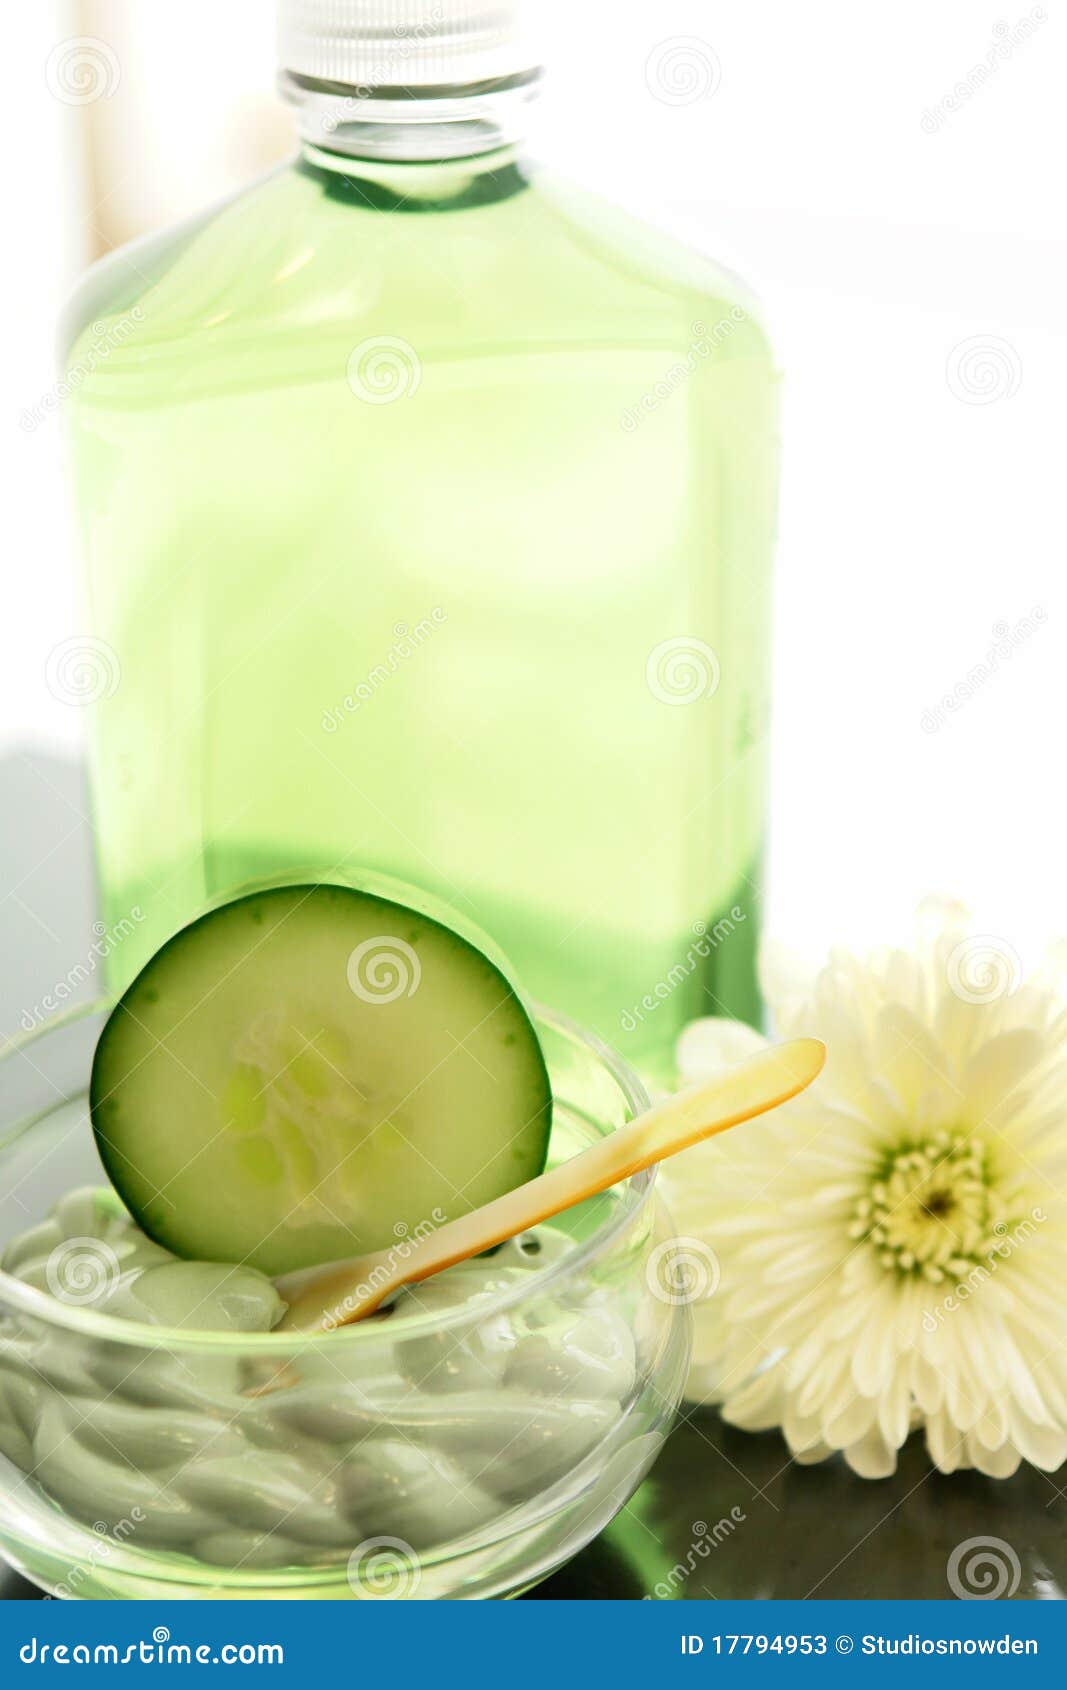 Cucumber spa treatment stock image. Image of single, liquid - 17794953